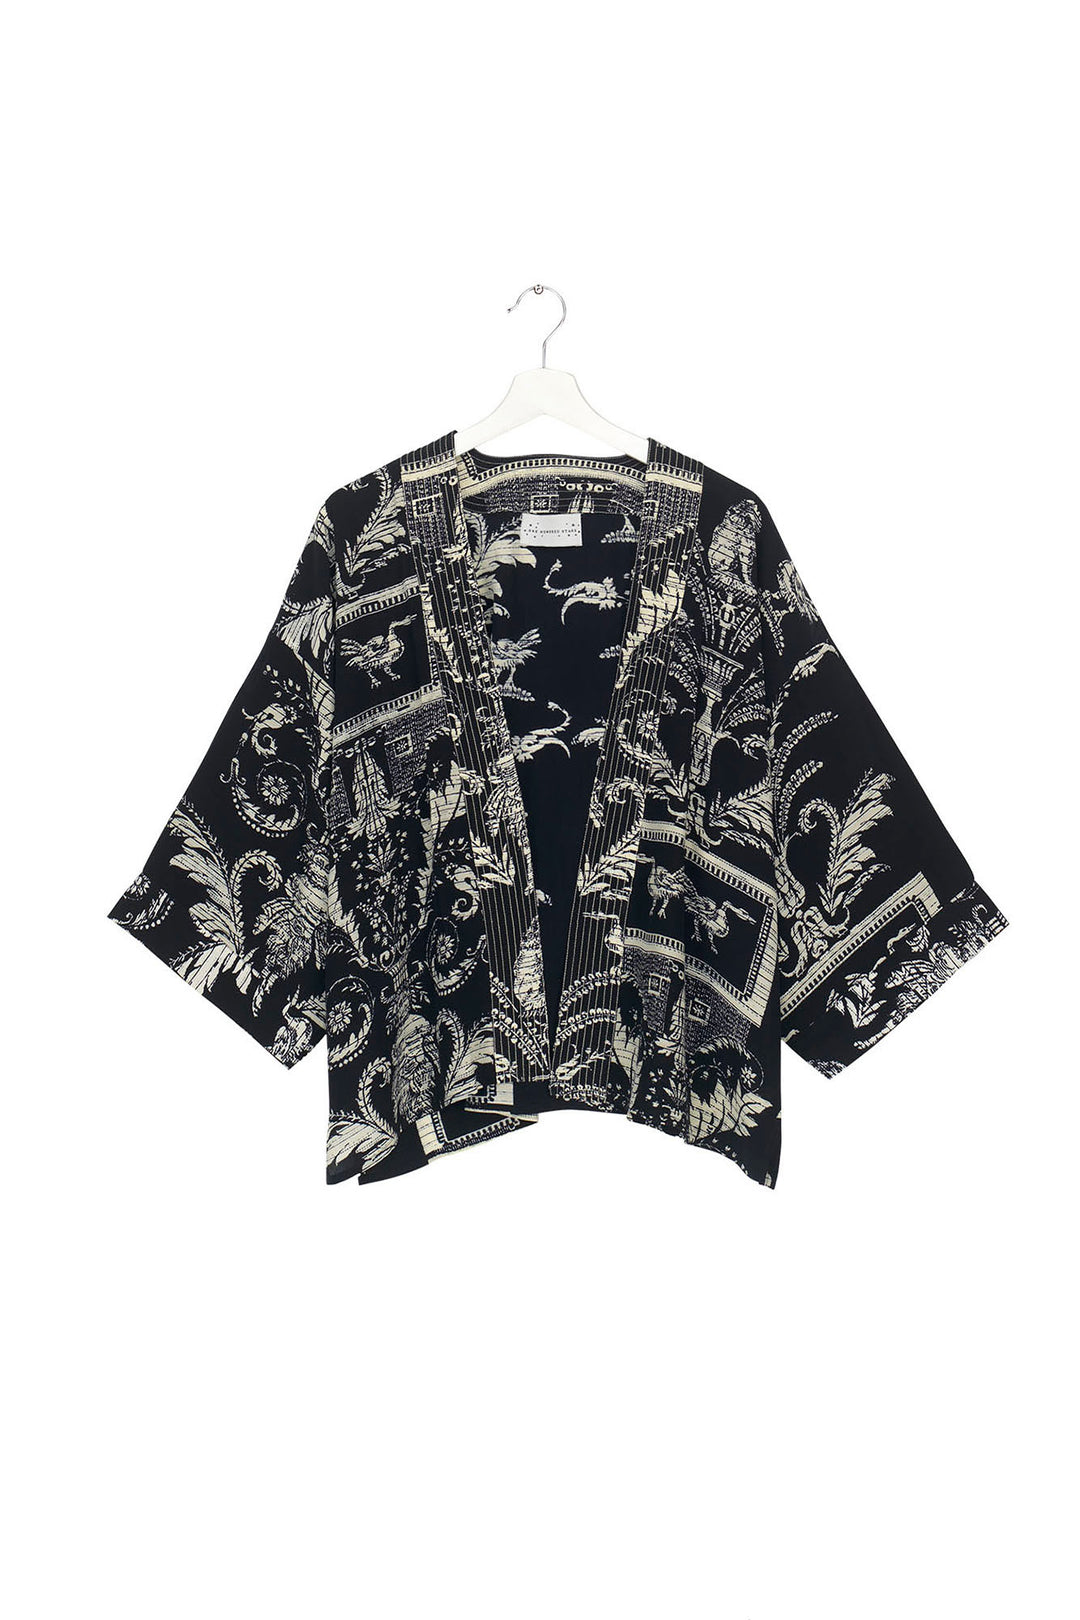 ladies short kimono jacket crepe in black and white vintage damask print by One Hundred Stars